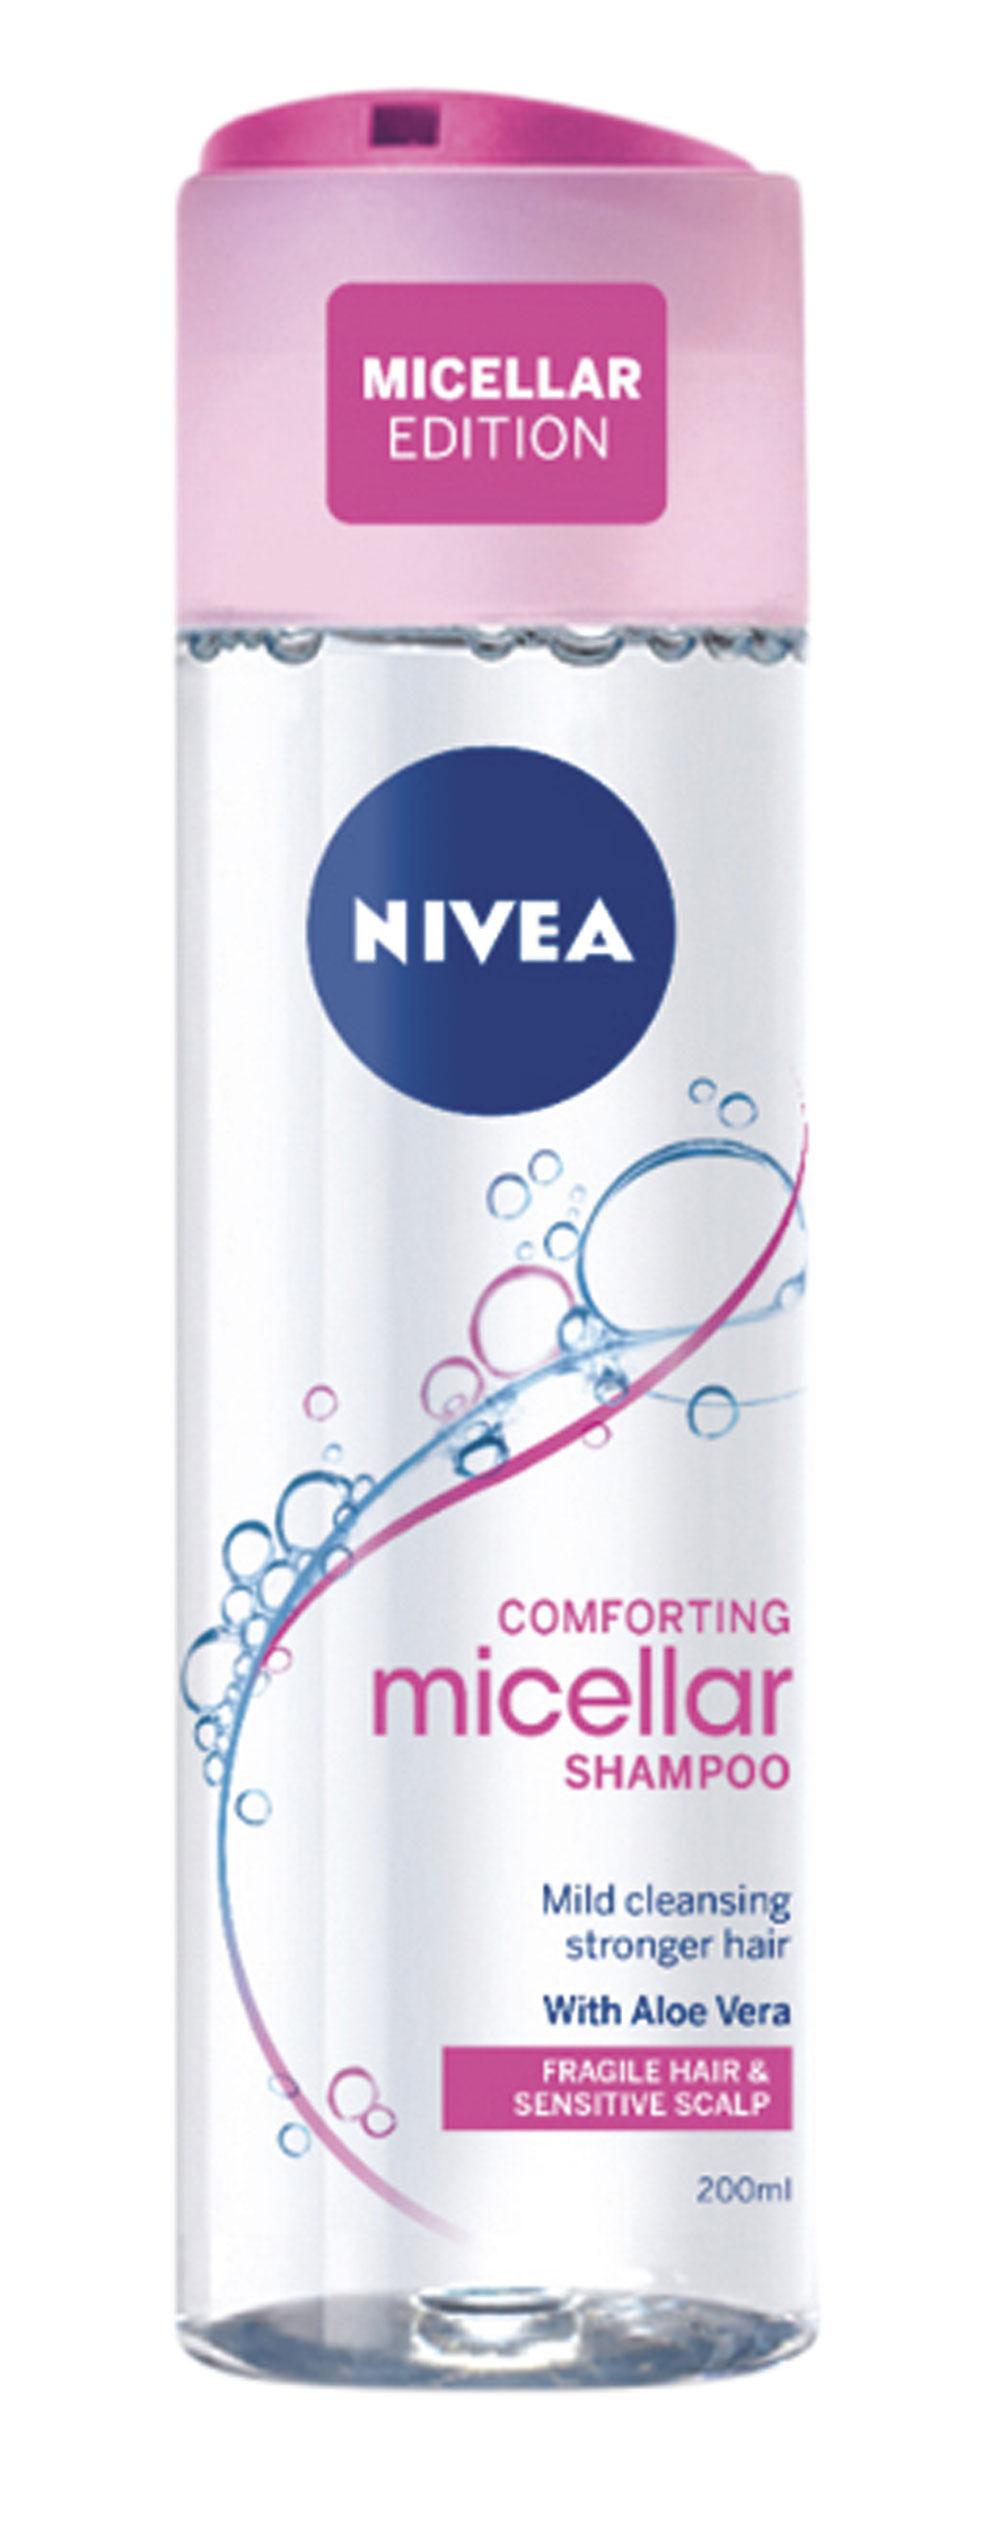 Comforting Micellar Shampoo (5,39 euro), Nivea.